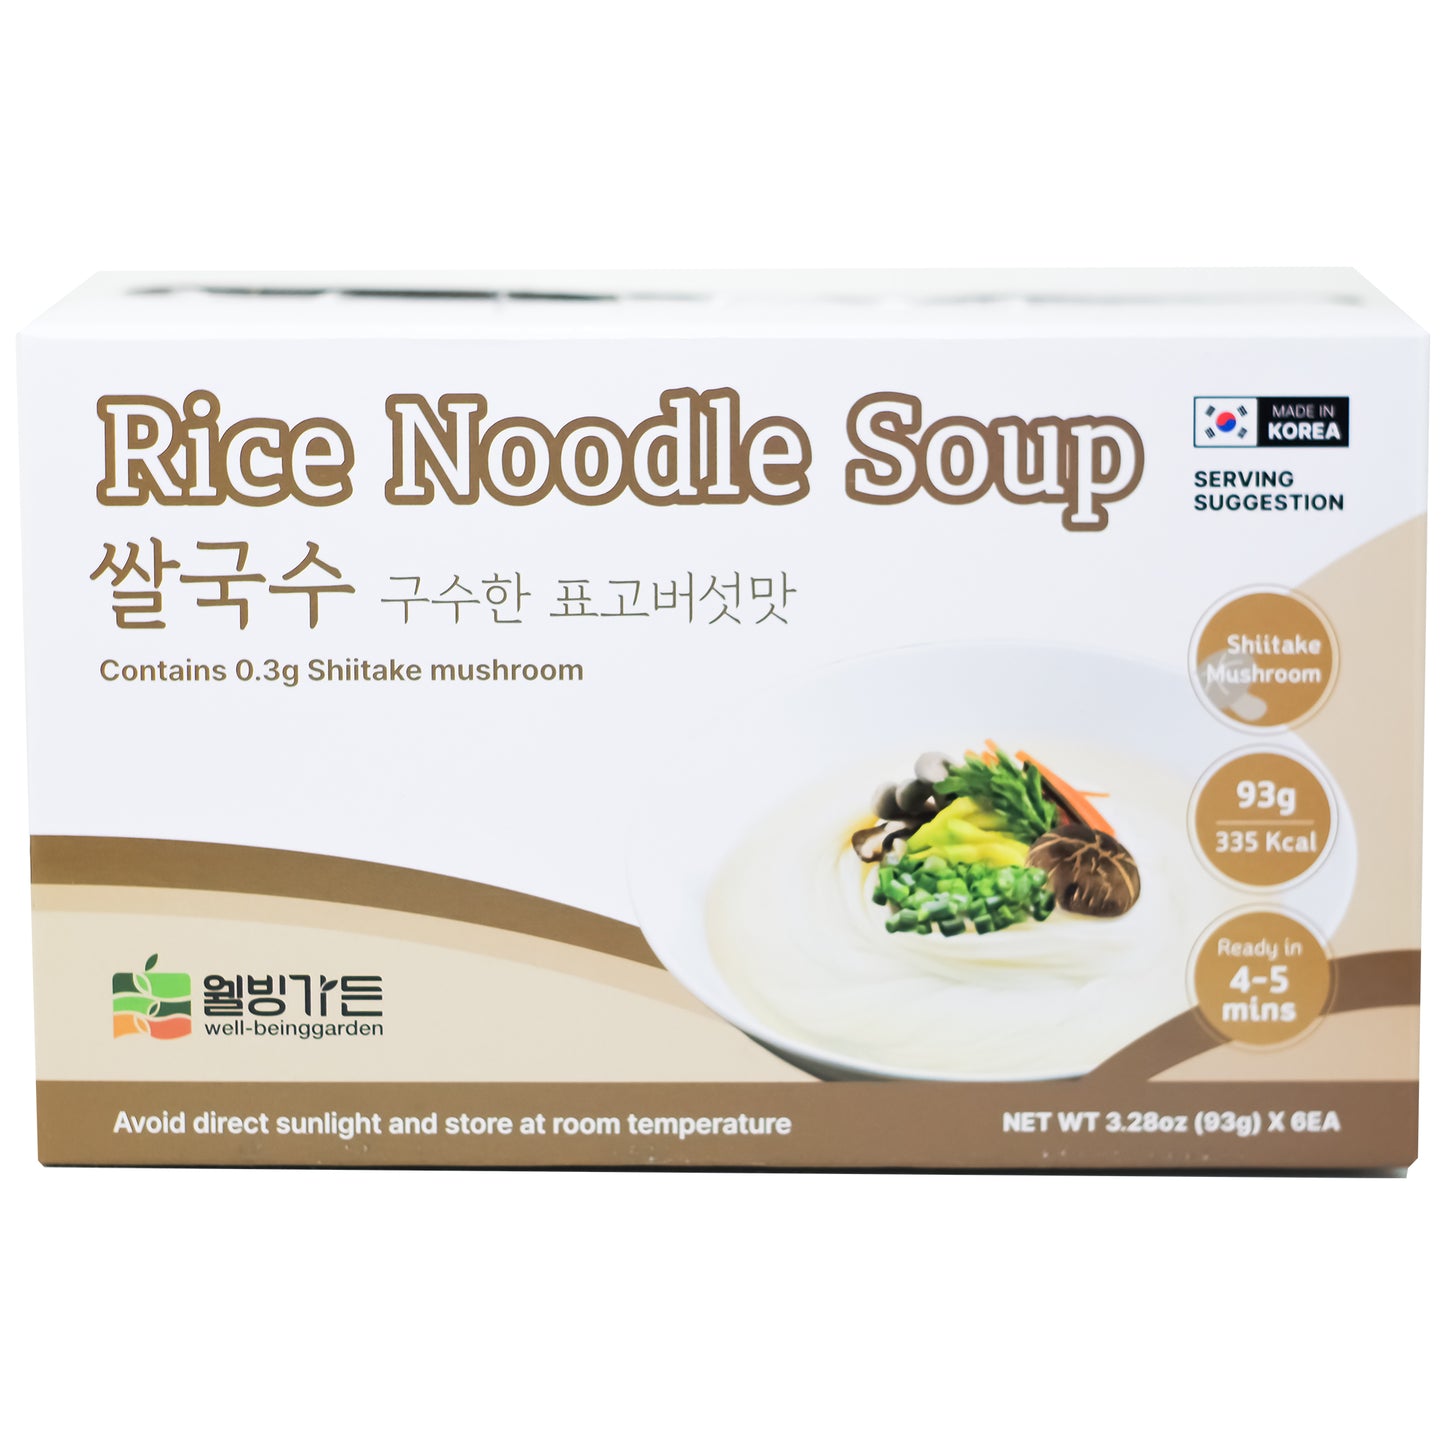 Rice mushroom Noodle Soup BENTO |SHIITAKE MUSHROOM  Flavor | 93g per BENTO, 6 Bowls 1 order  93g/pack 표고버섯맛 쌀국수